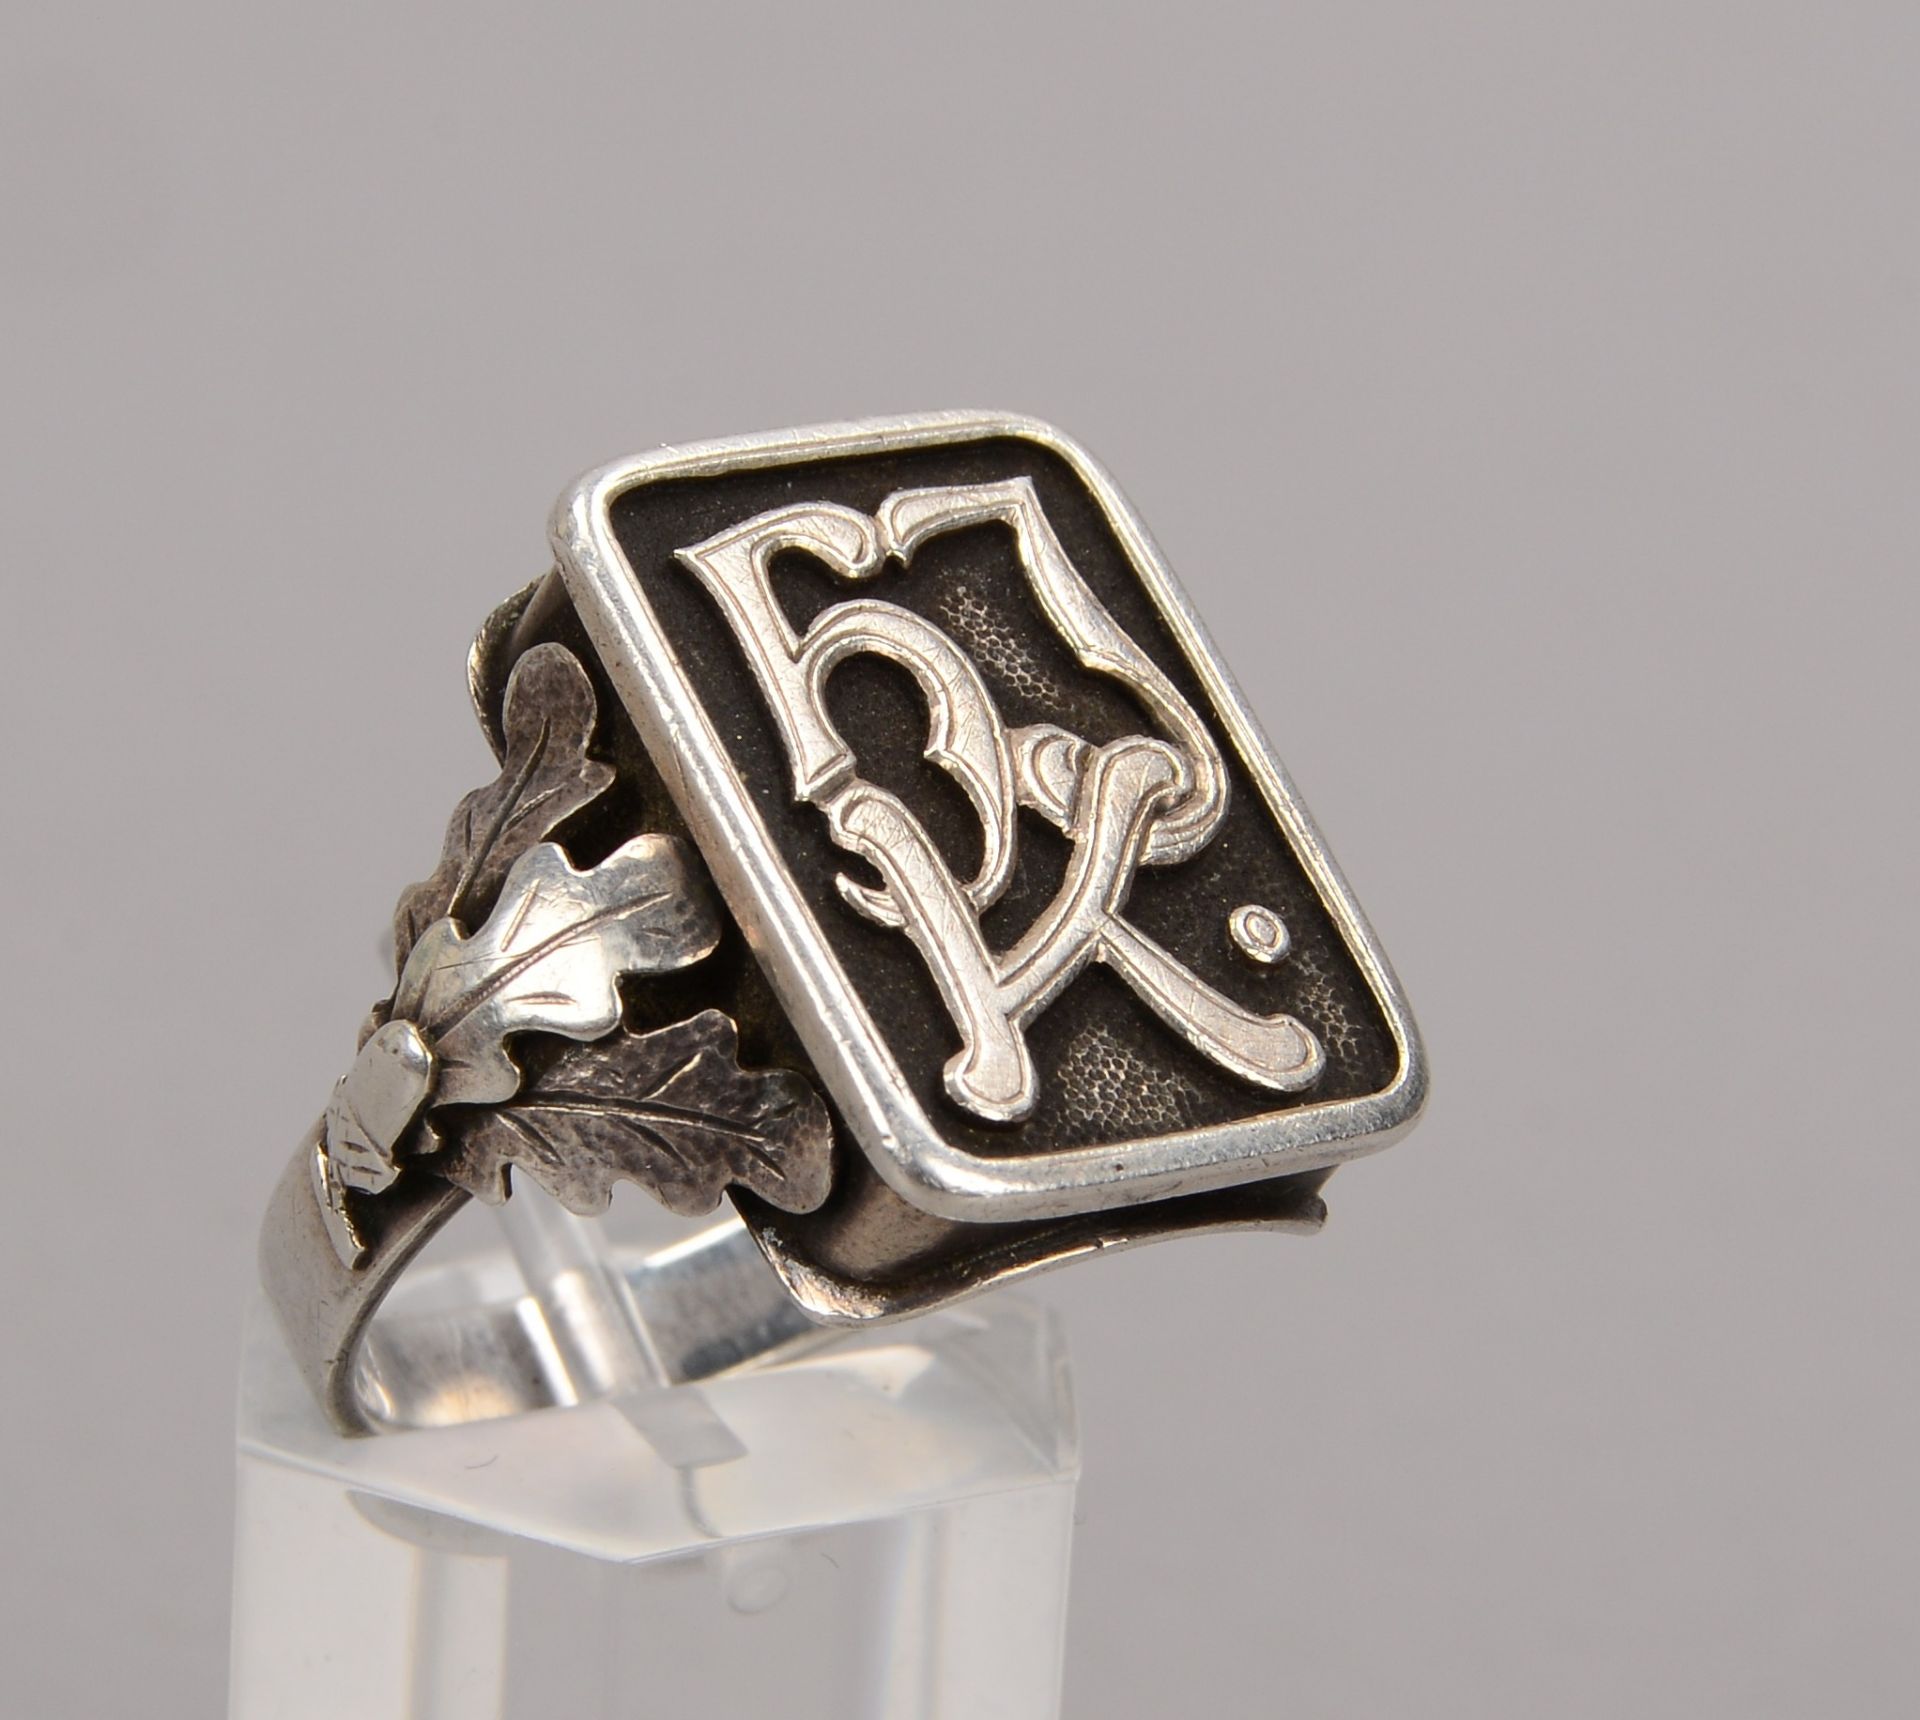 Ring ( III. Reich - HJ ?), 800 Silber, Ringkopf mit Initialen HJK, Ringschulter mit reliefiertem